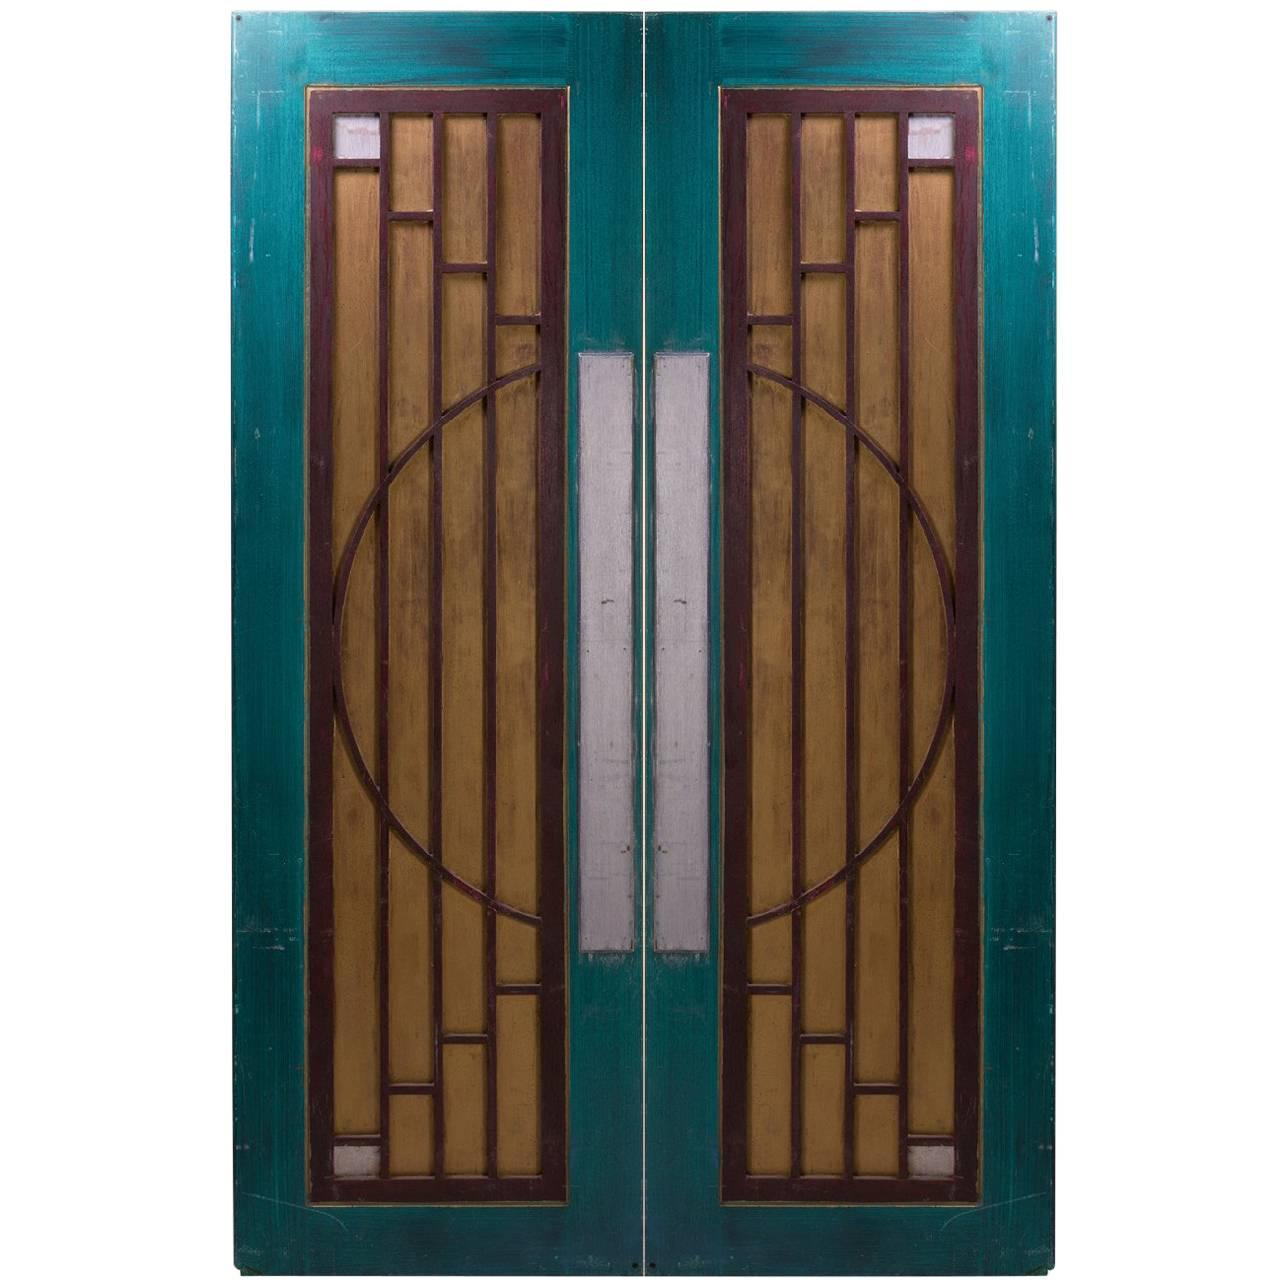 Art-Deco Style Doors from Goodspeed Opera House